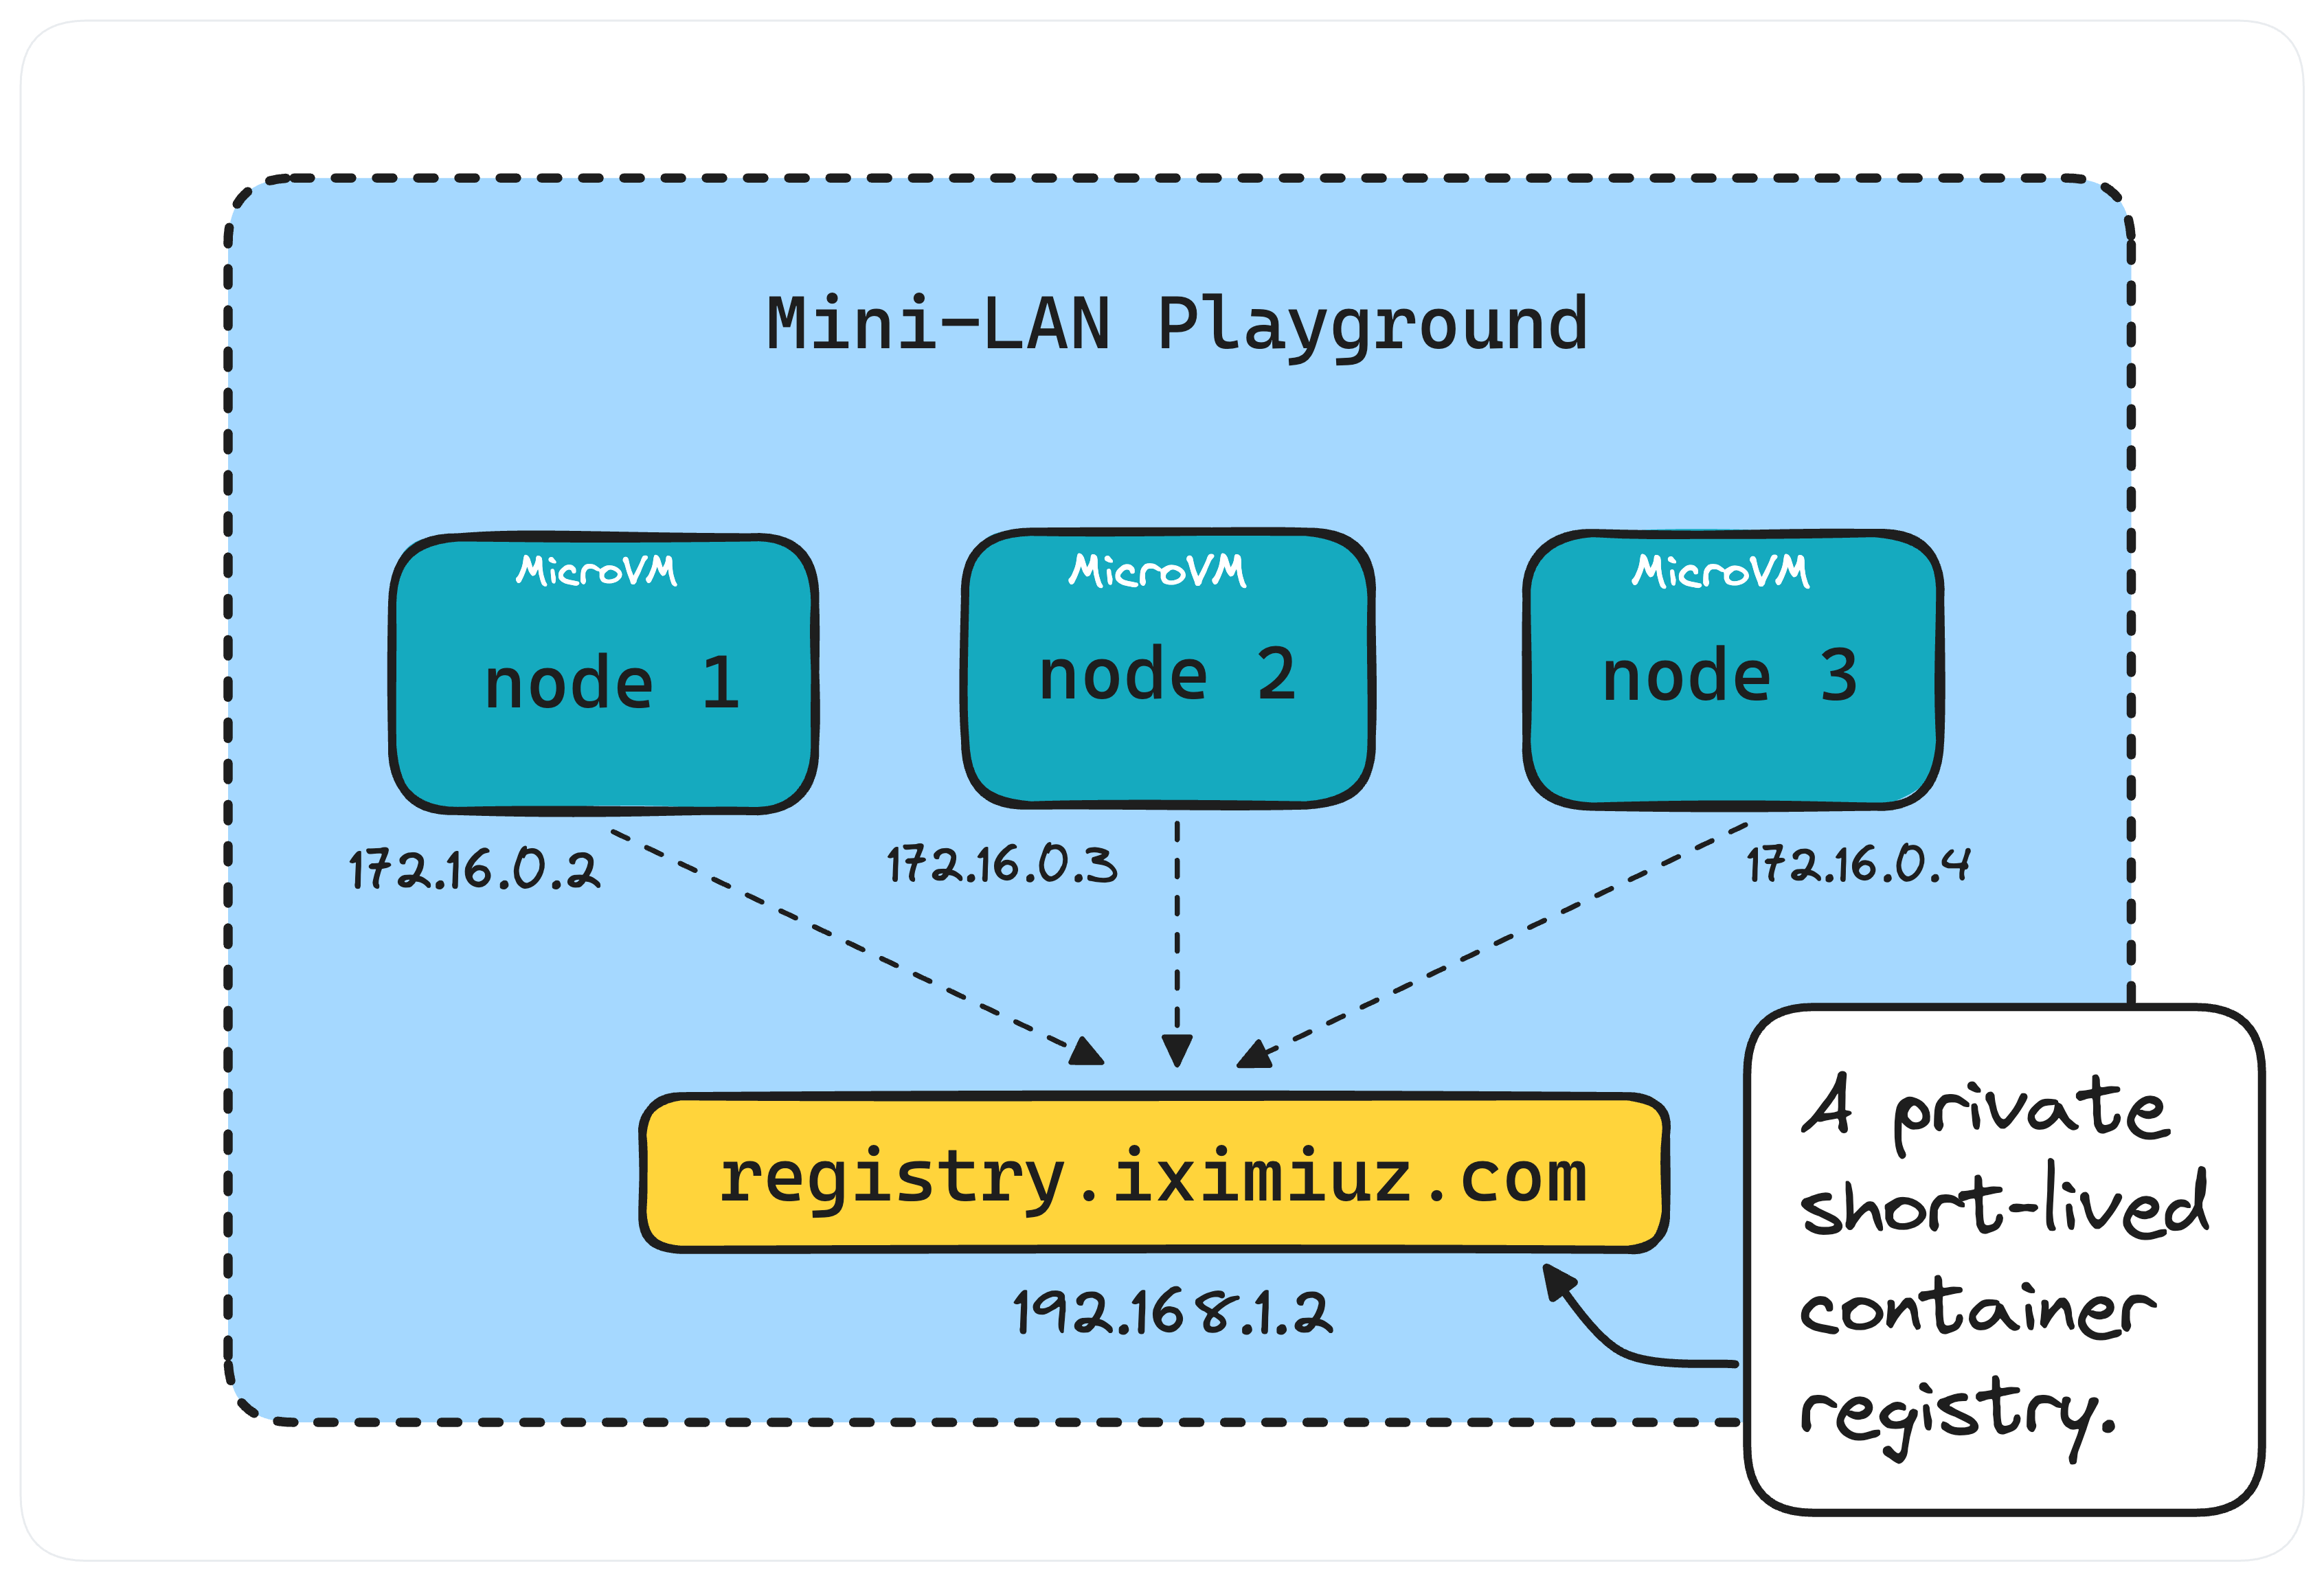 MiniLAN (Ubuntu) playground: Three refined Ubuntu VMs connected into a single network.